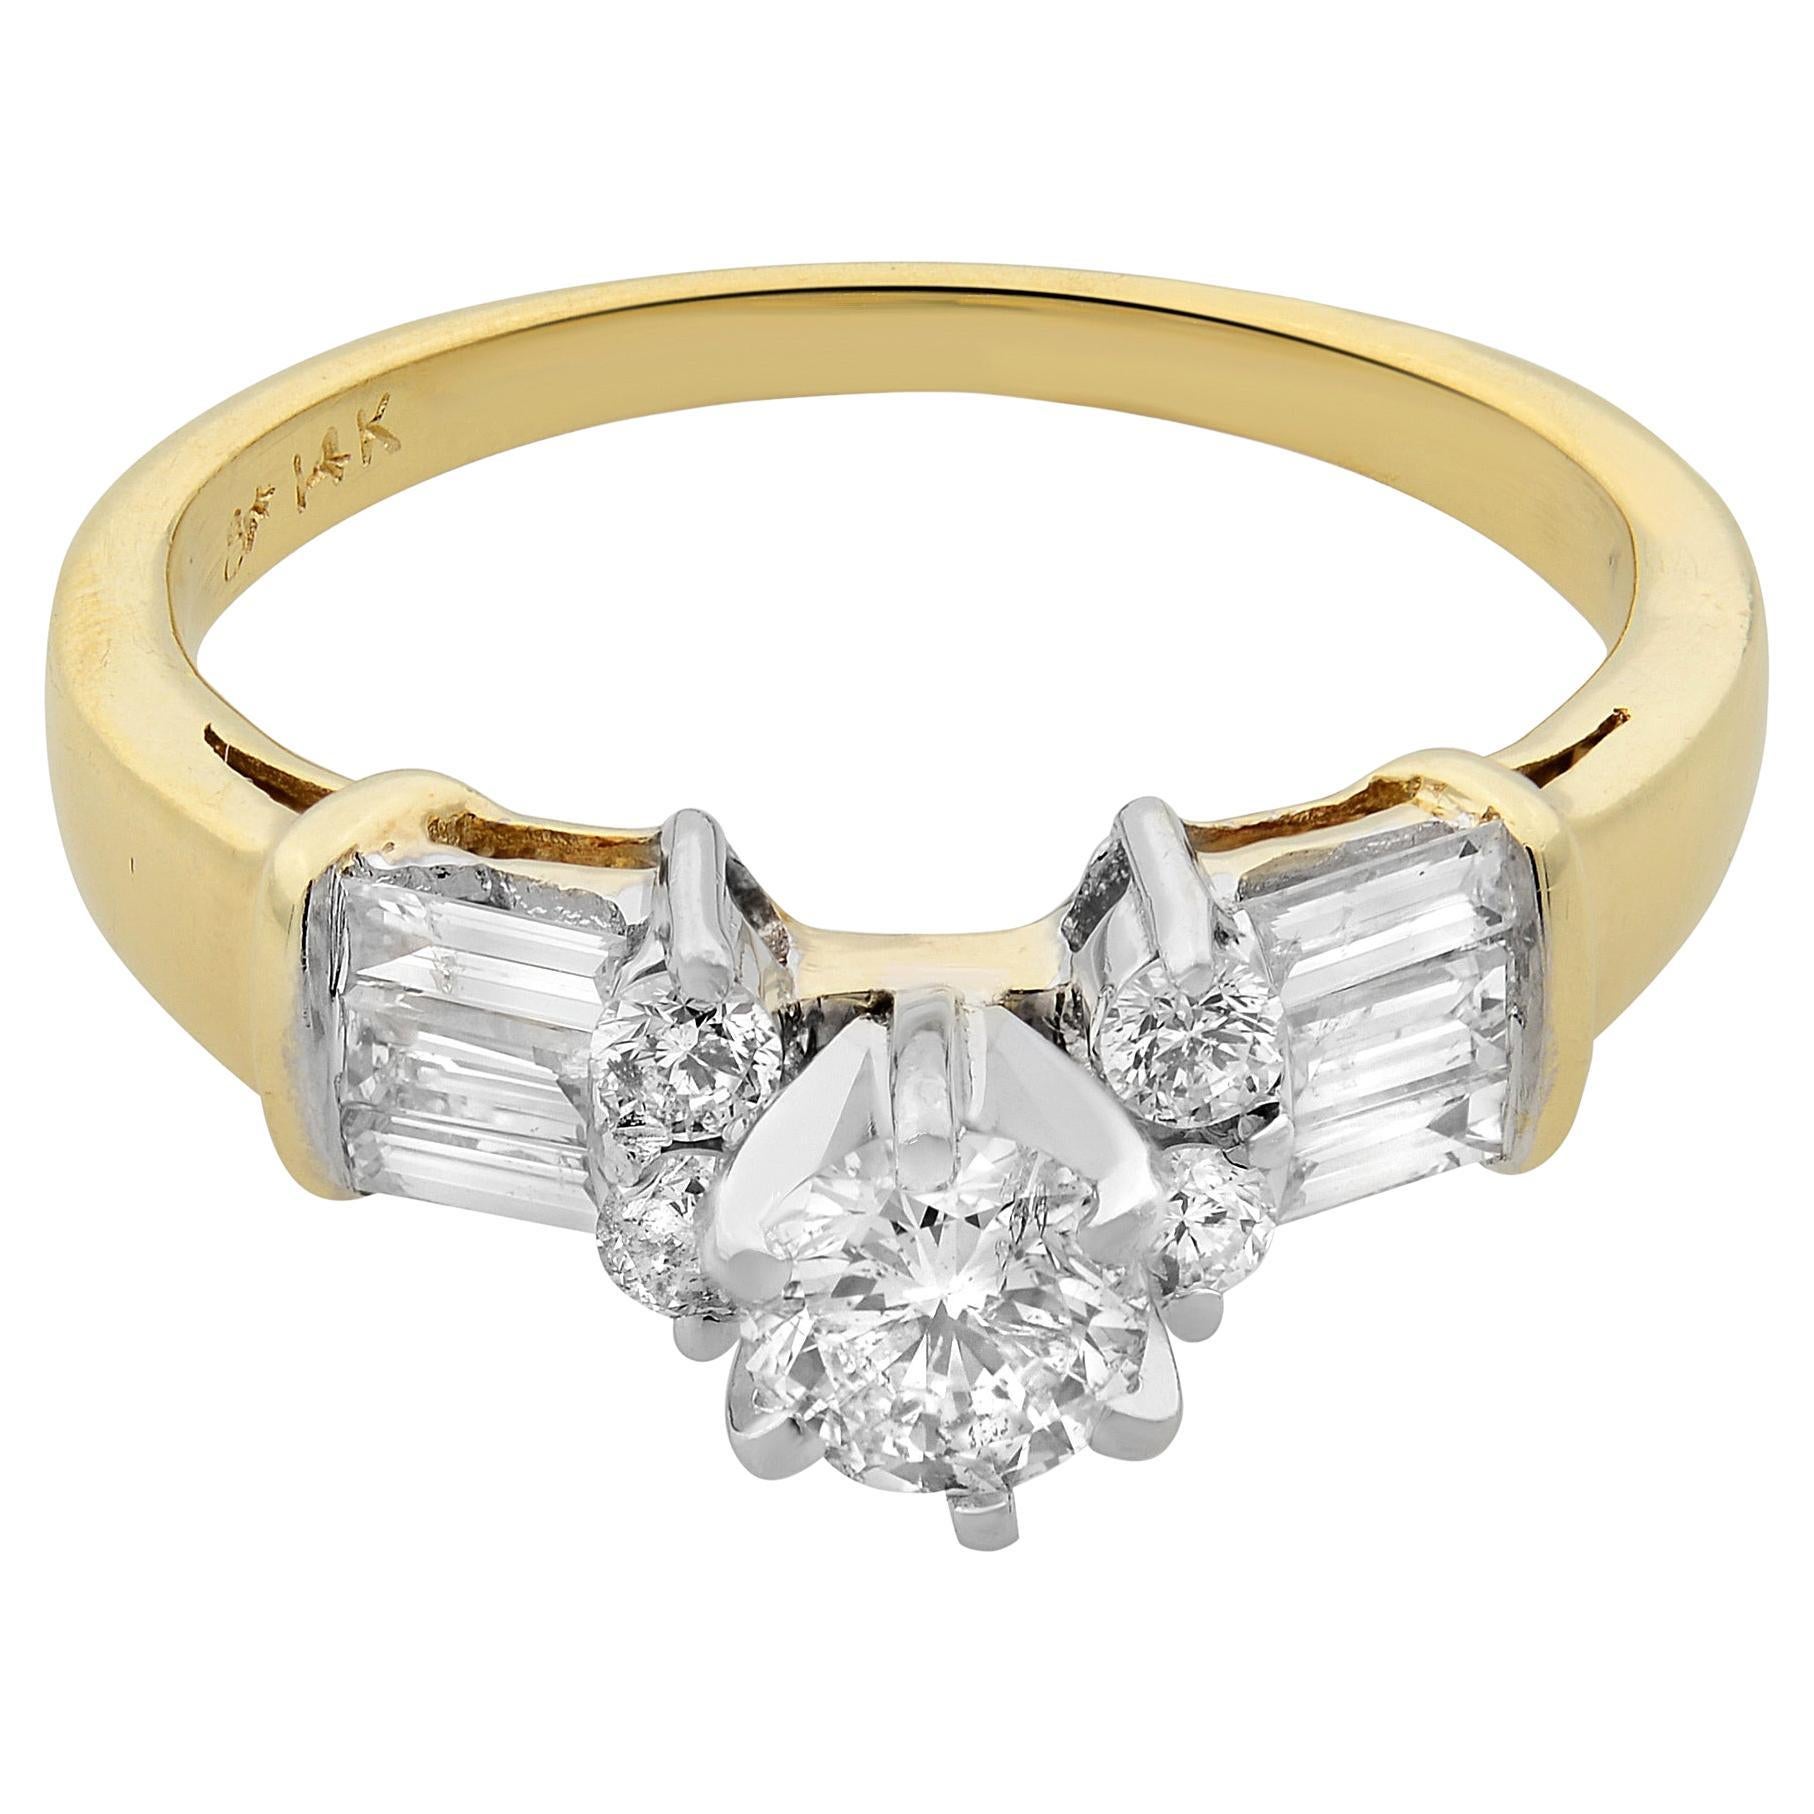 1.00Cttw Round & Baguette Cut Diamond Engagement Ring 14K Yellow Gold Size 6.5